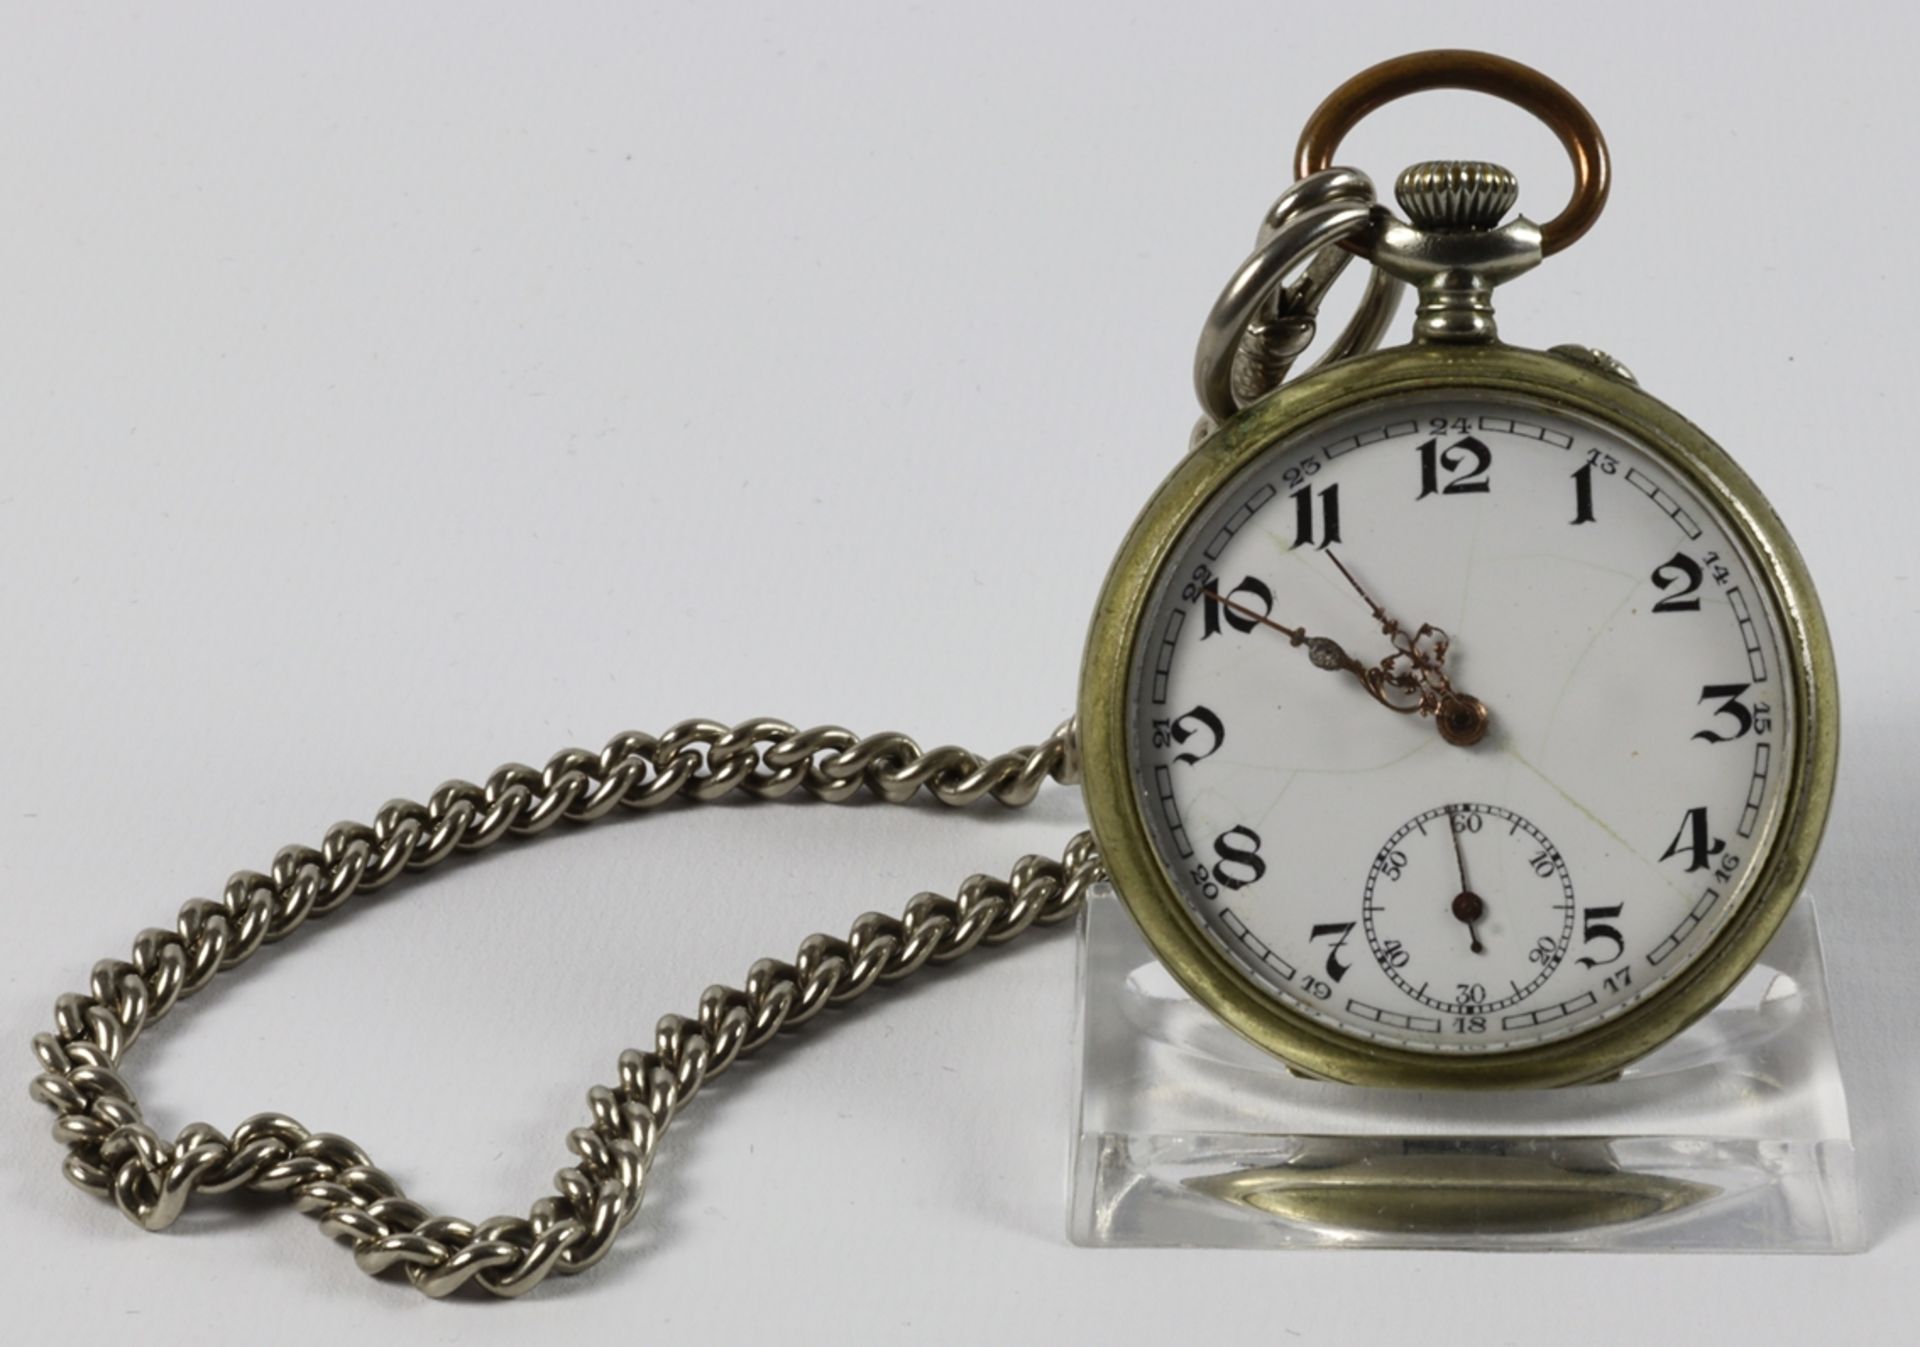 Silver gentleman's pocket watch with chain, historicism 1900 - 1920, German